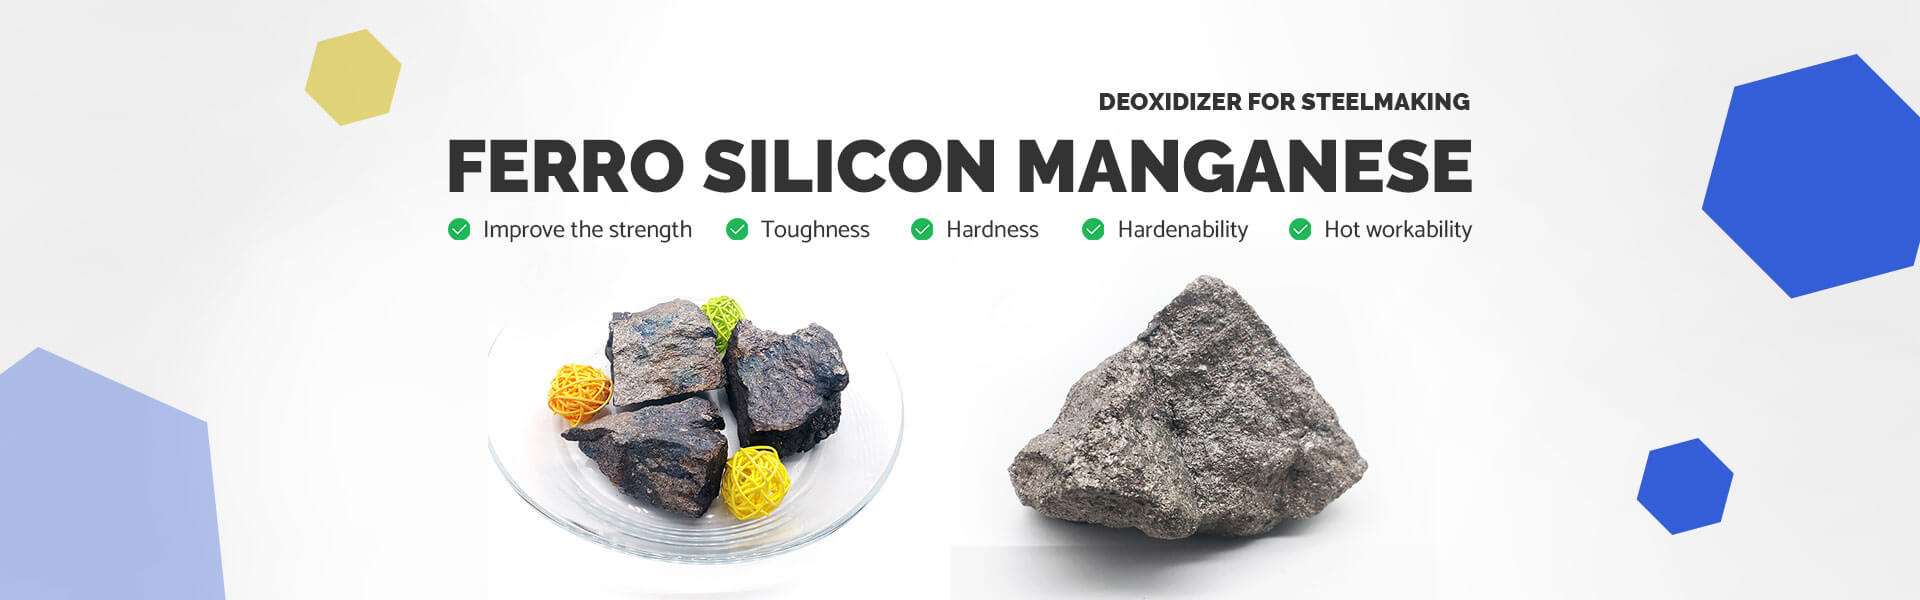 Ferro silicon manganese